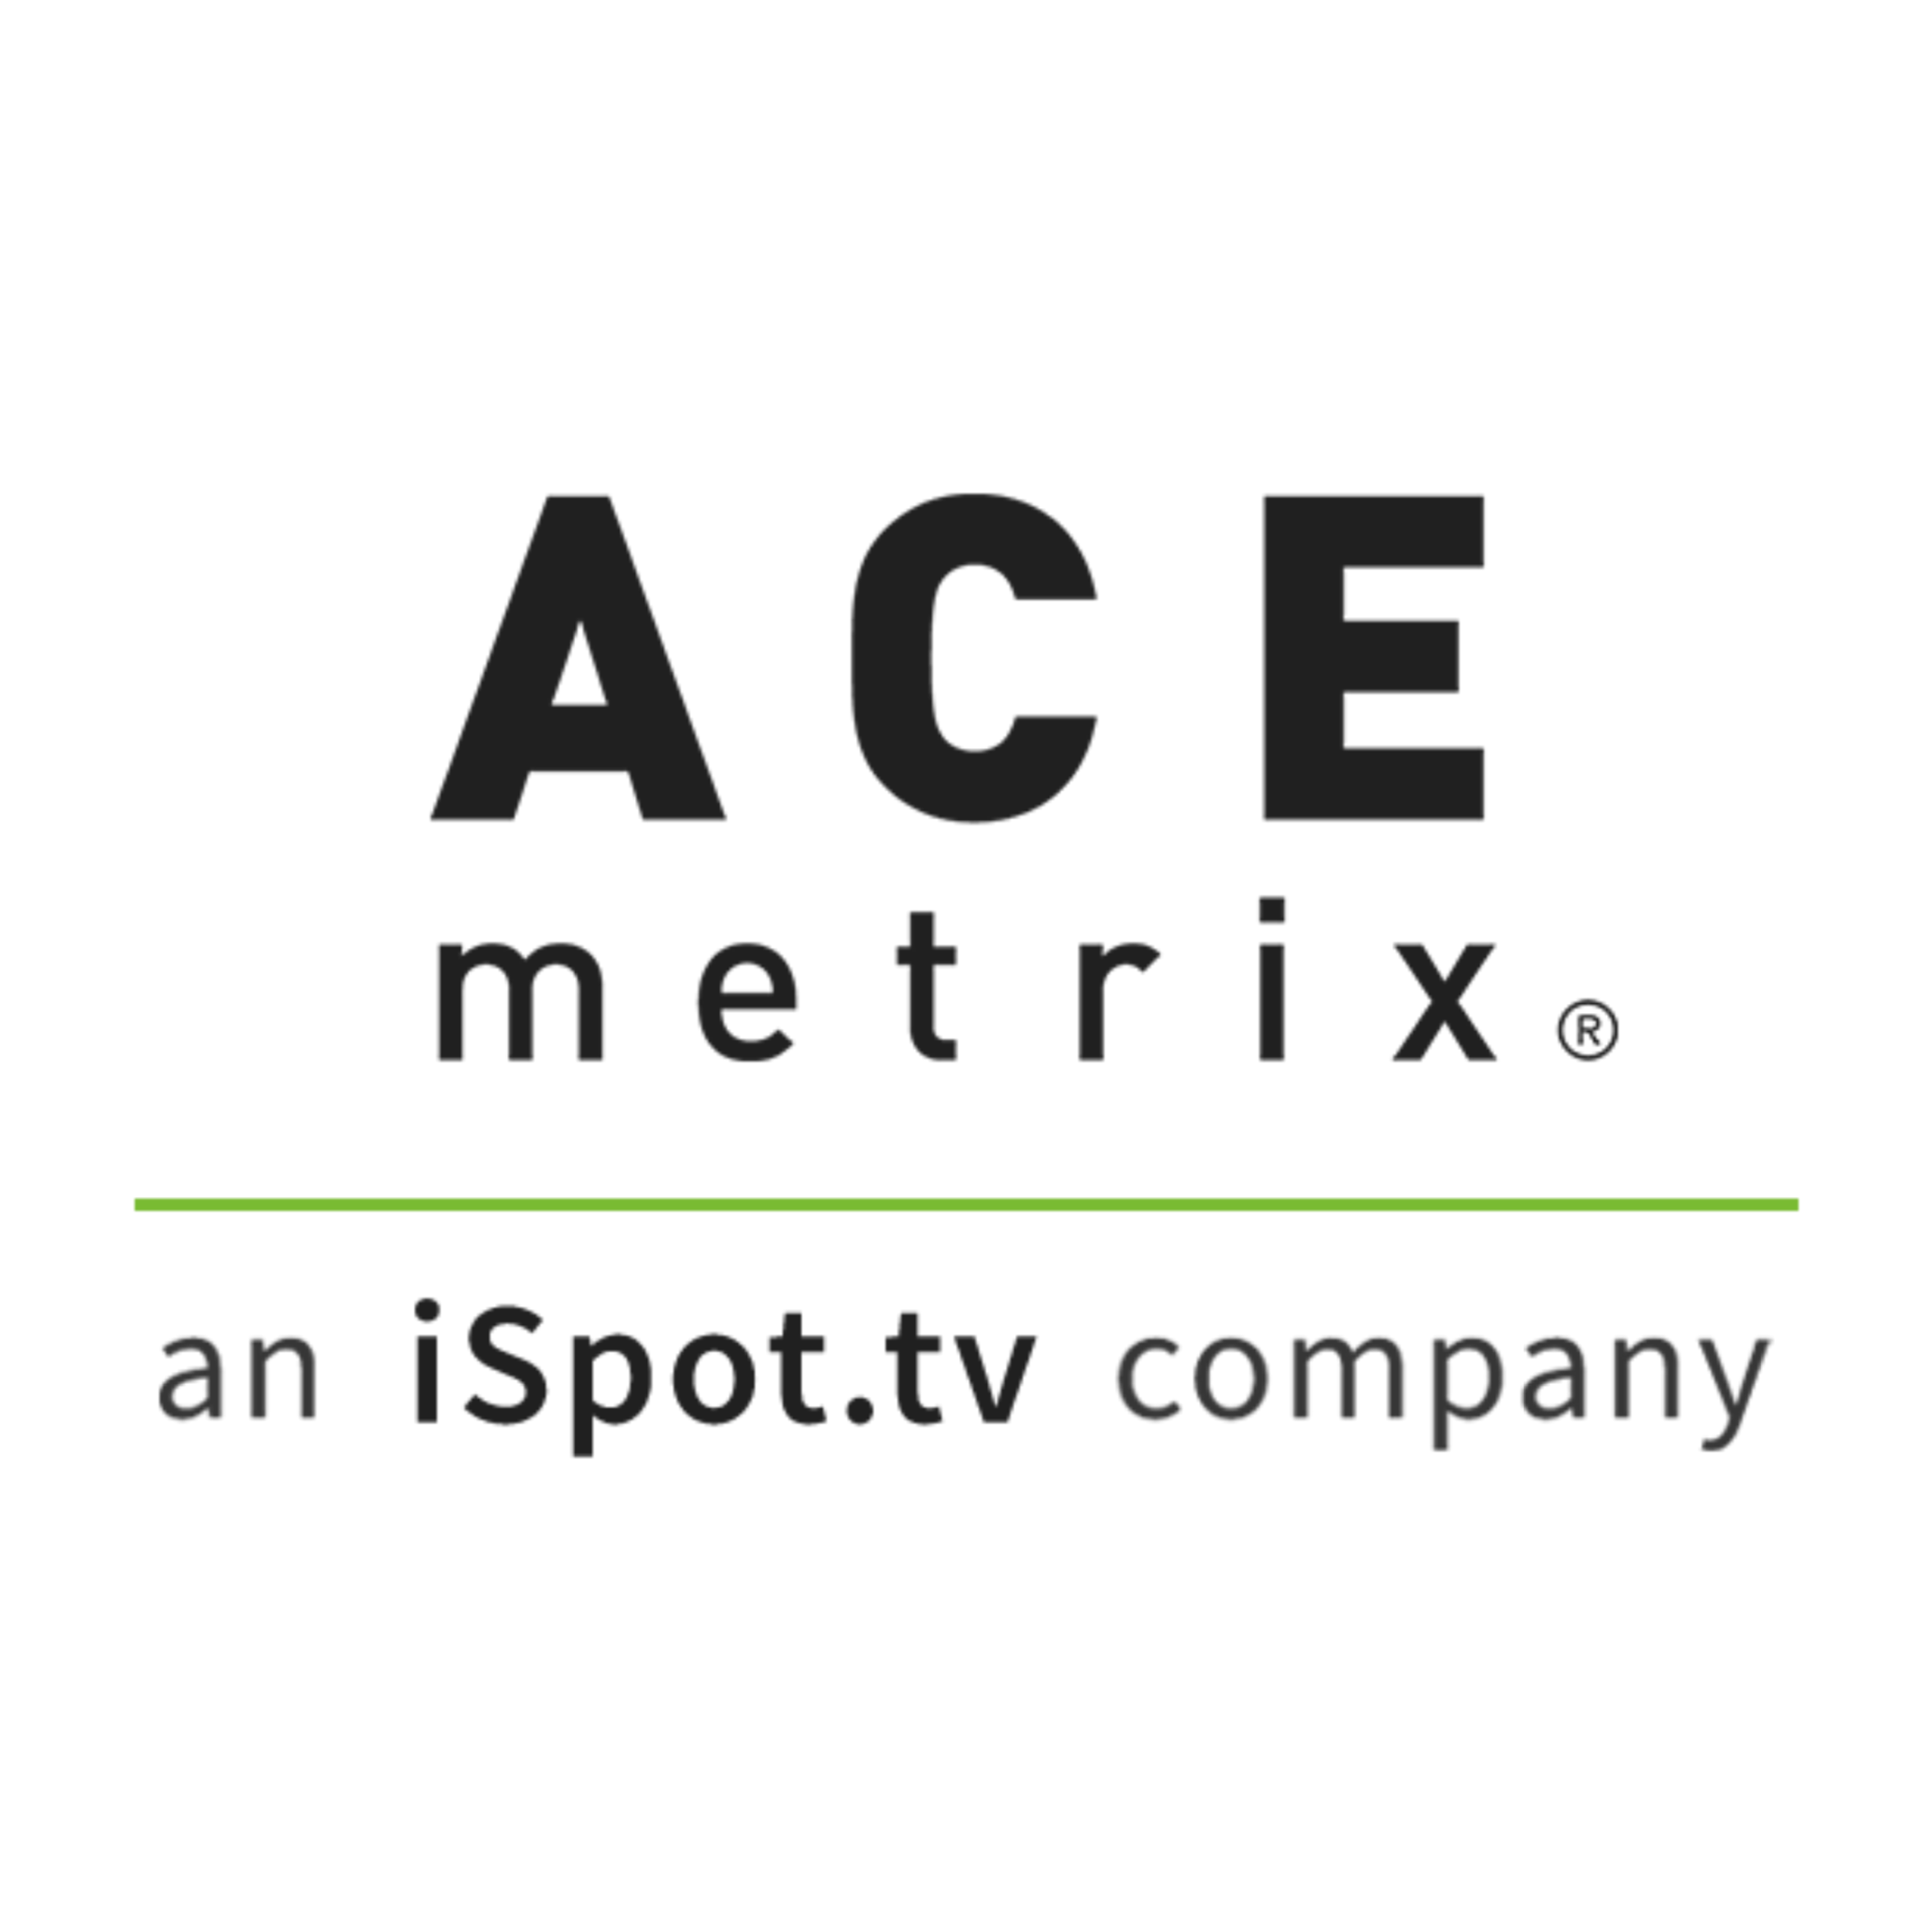 Ace Metrix an iSpot.tv company